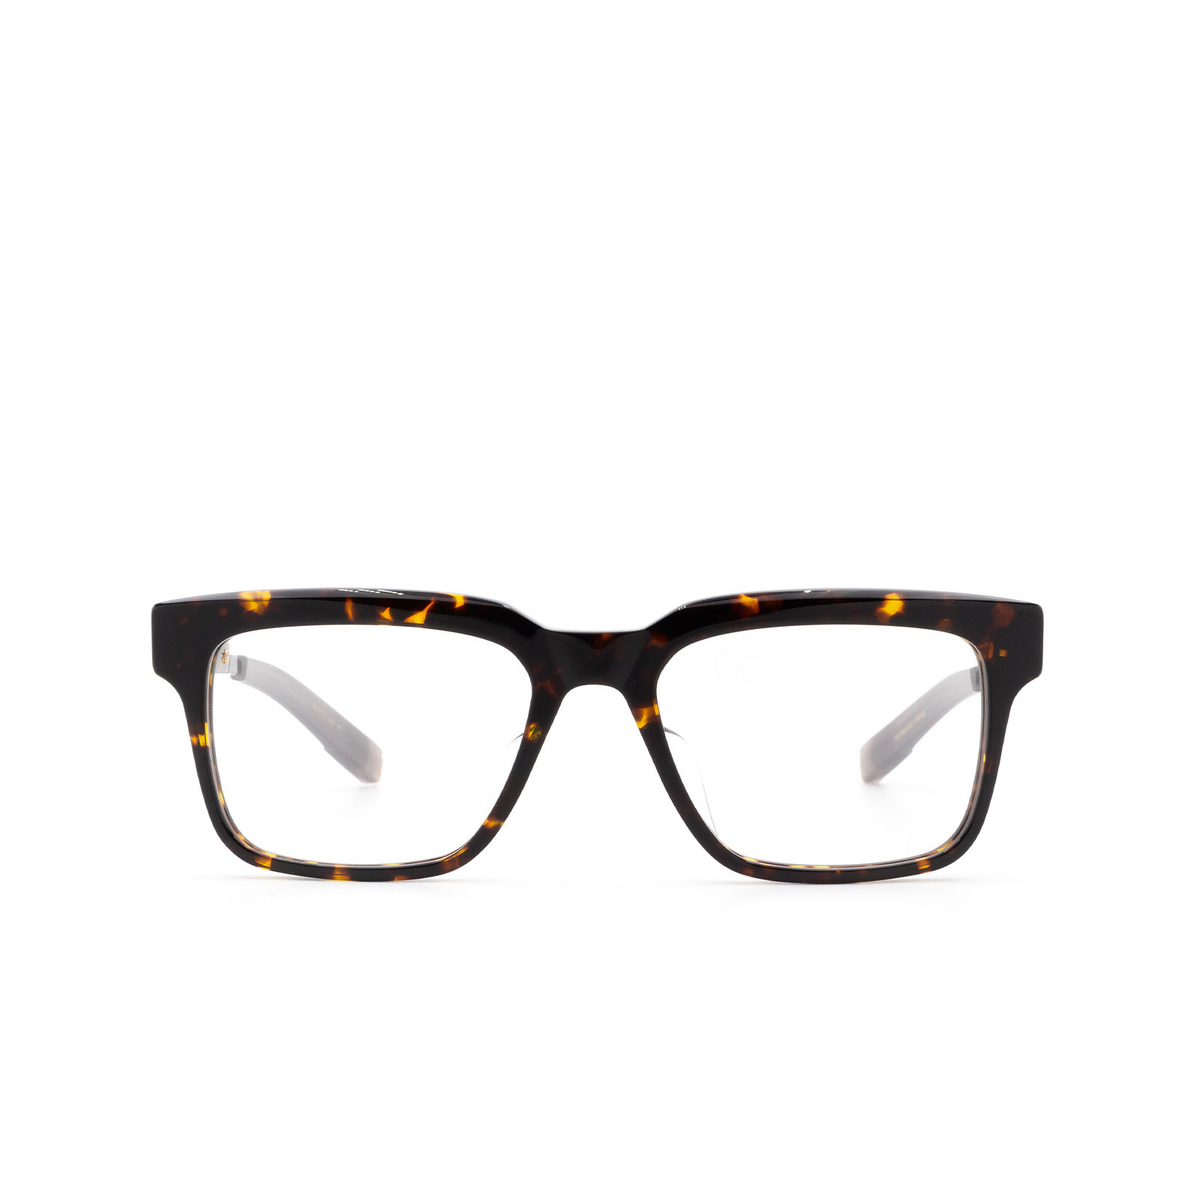 Dita® Square Eyeglasses: DLX702 color Trt-gld - front view.